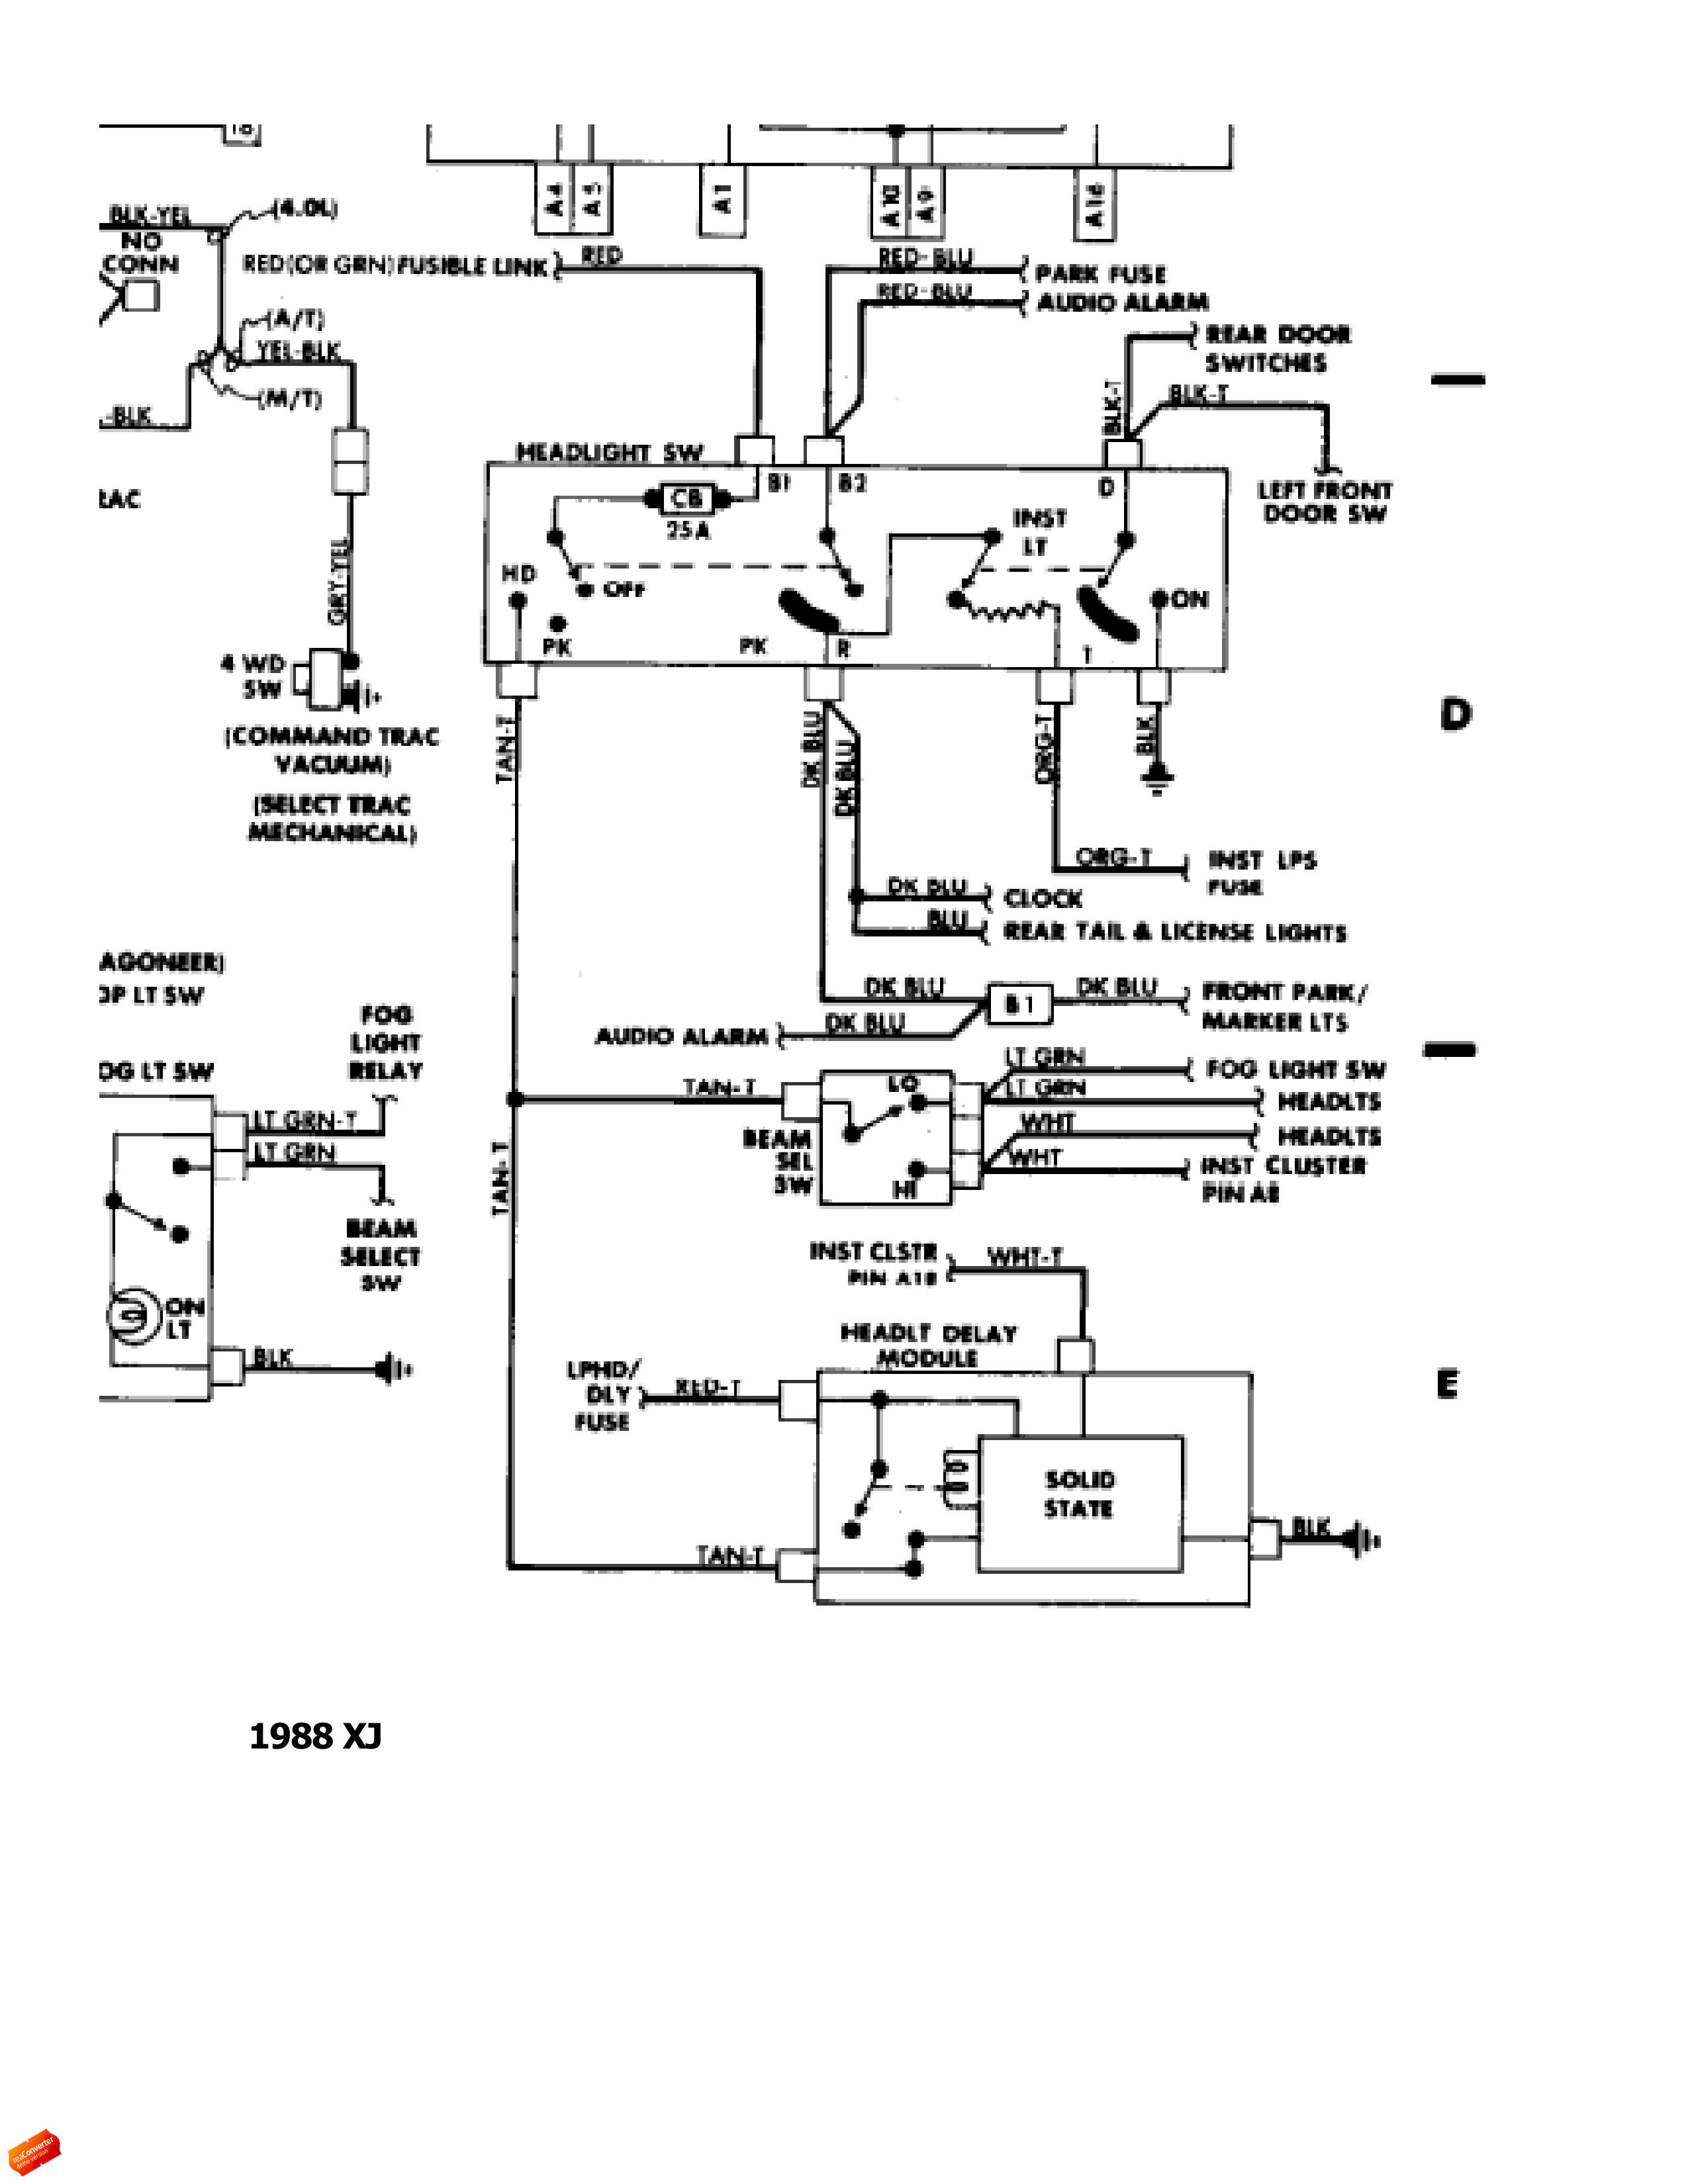 In need of wiring diagram. - Jeep Cherokee Forum